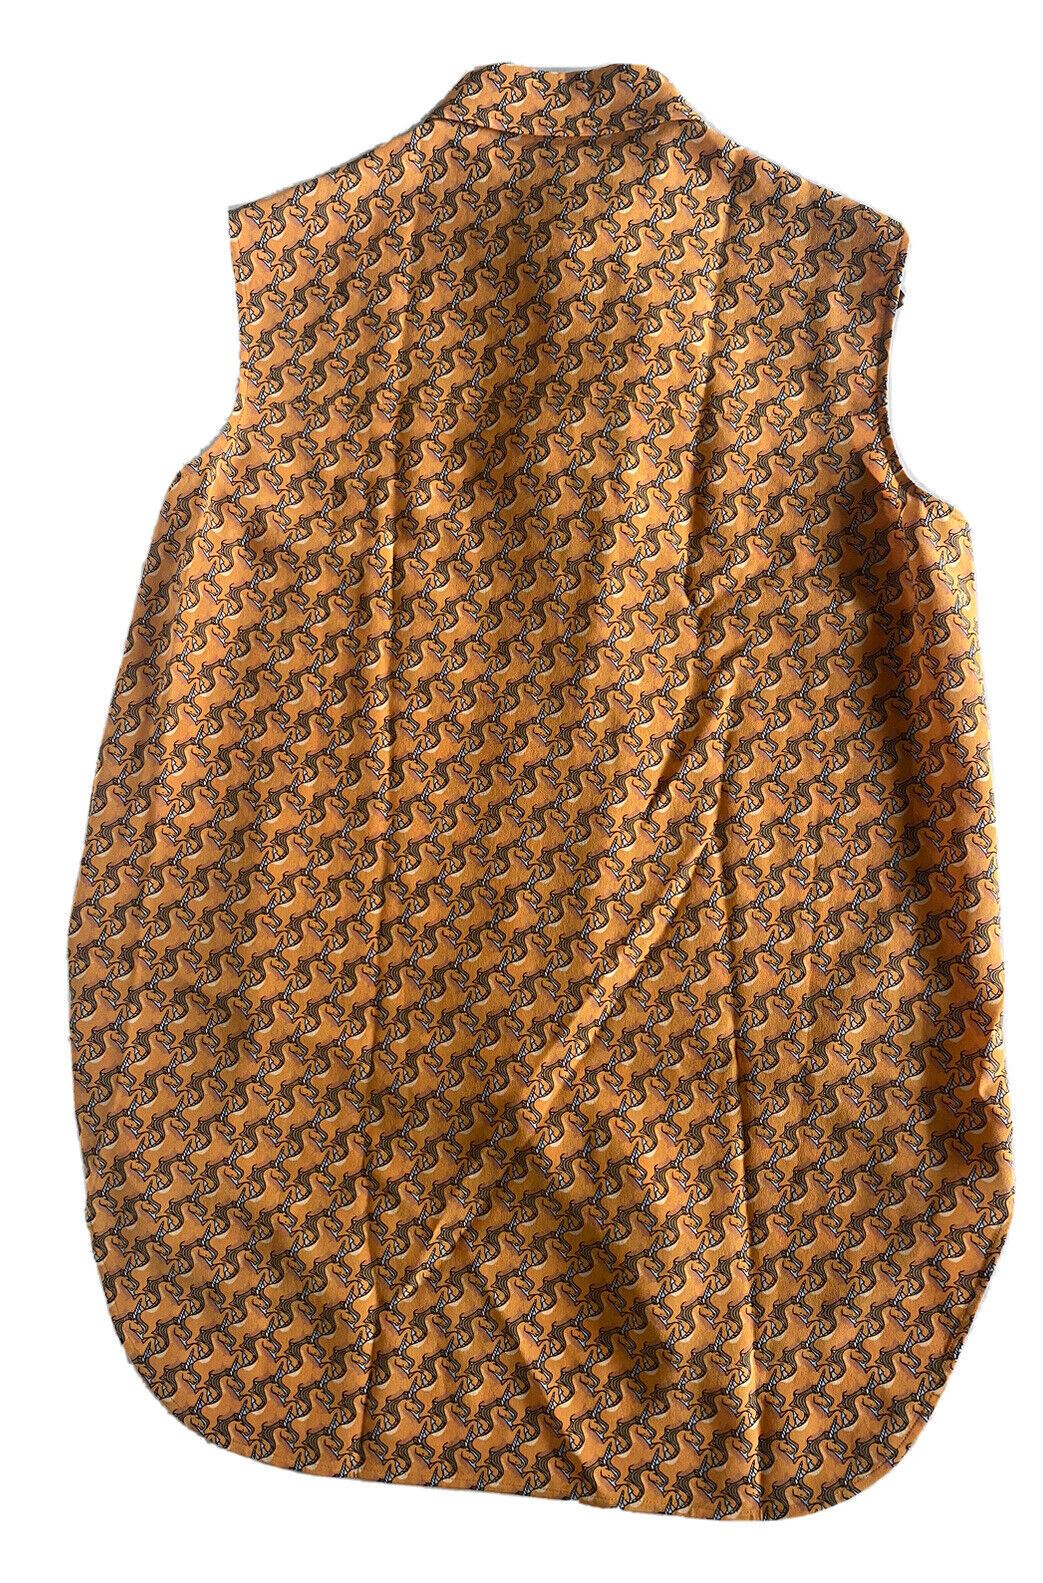 NWT $890 Burberry Women's Bright Melon Button-Up Shirt 4 US (6 UK) 80324481